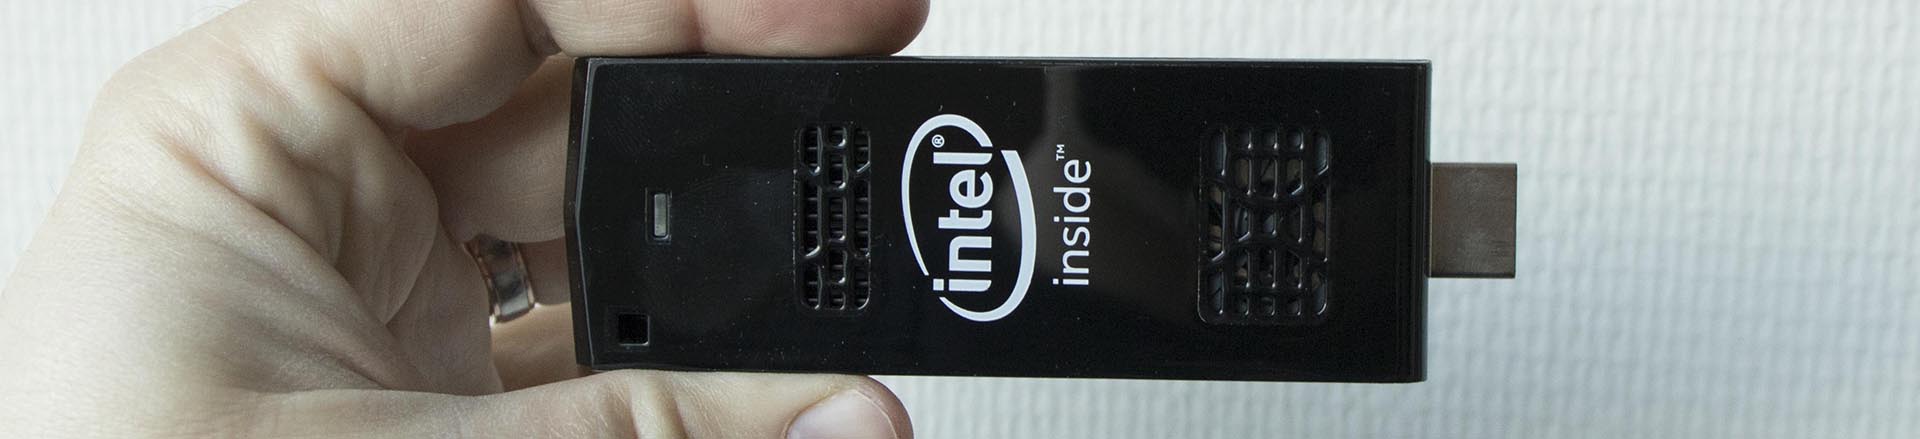 Intel Compute Stick IMG_7794